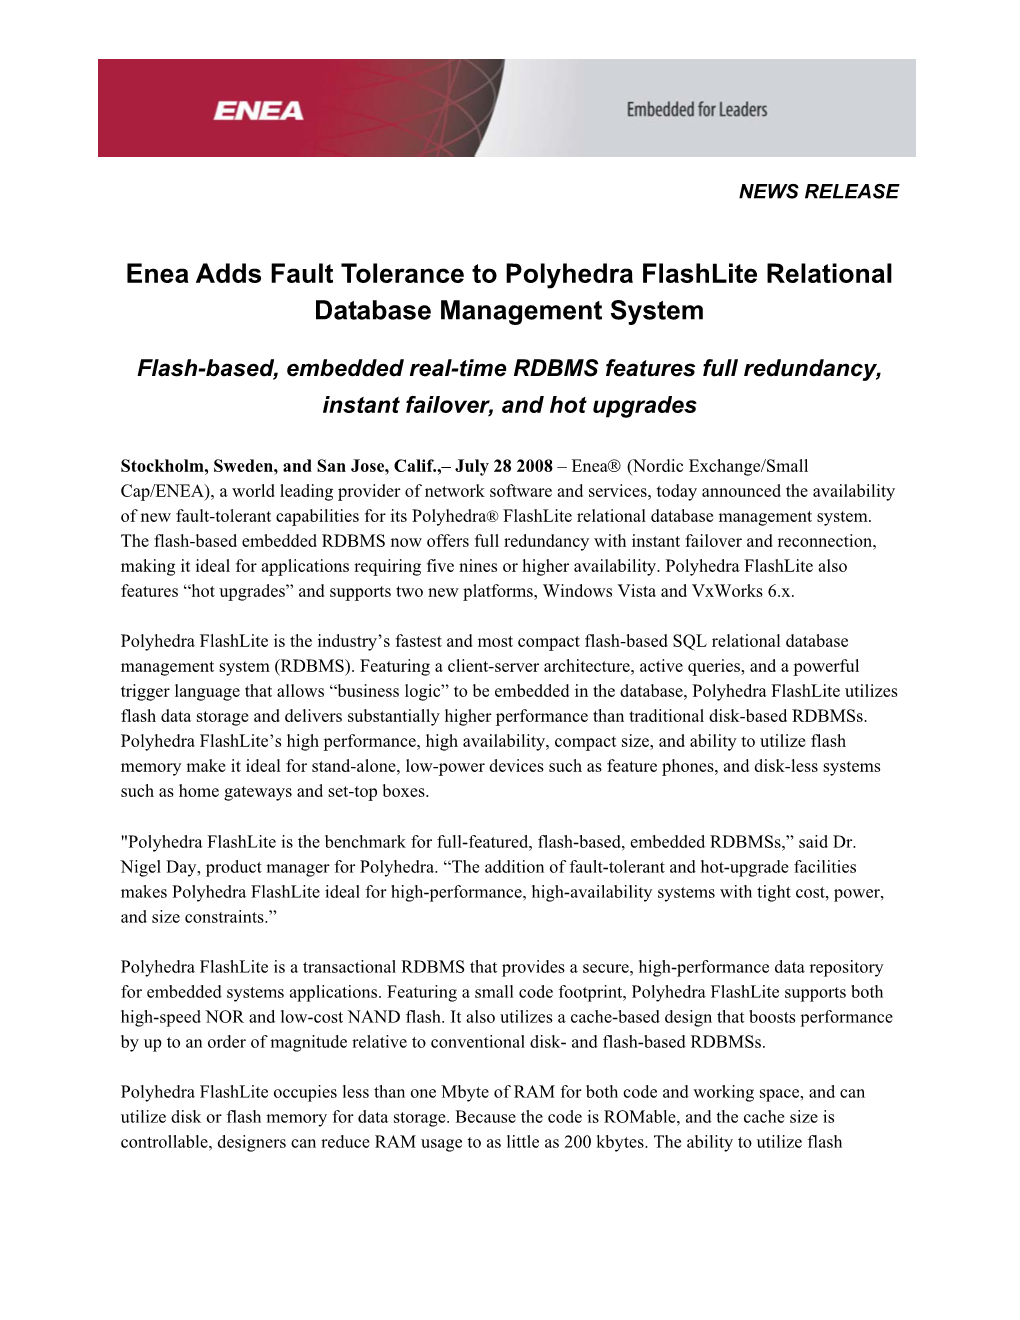 Enea Adds Fault Tolerance to Polyhedra Flashlite Relational Database Management System